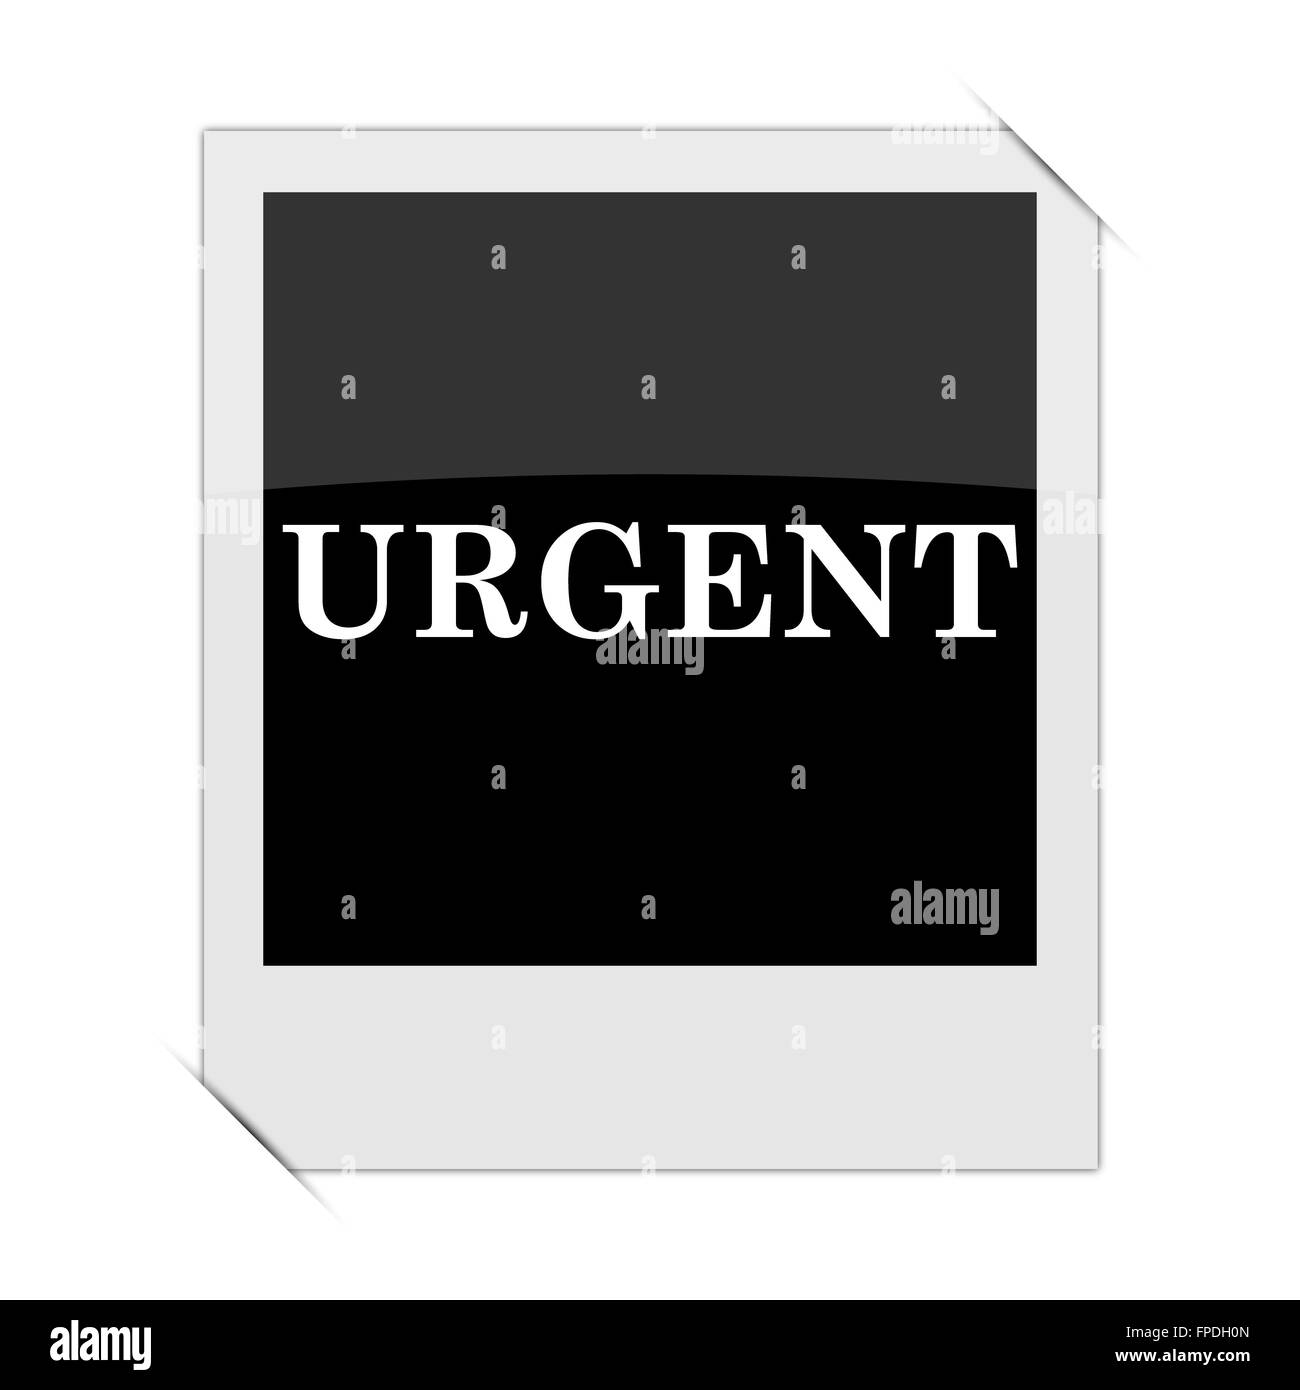 Urgent icon within a photo on white background Stock Photo